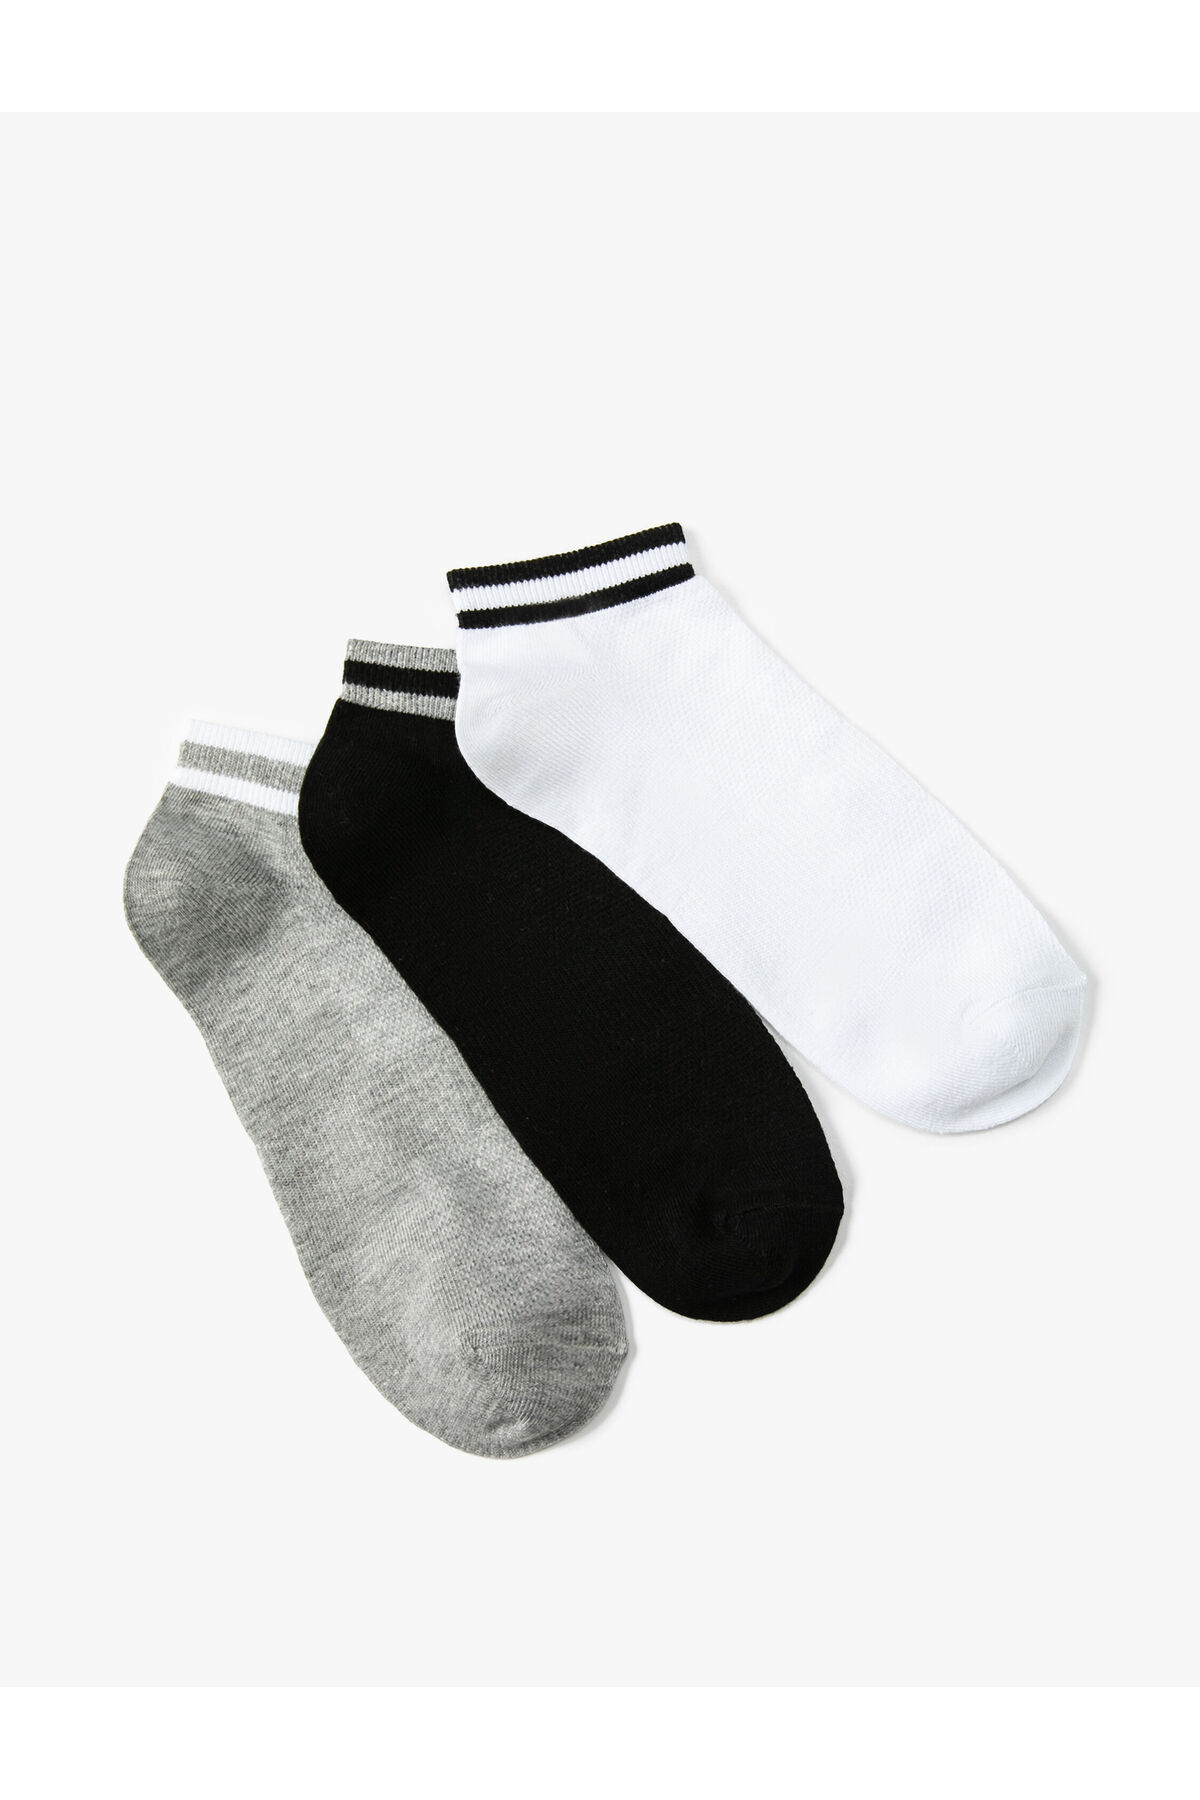 Koton 3-Pack of Booties Socks Multi Color Strip Detailed